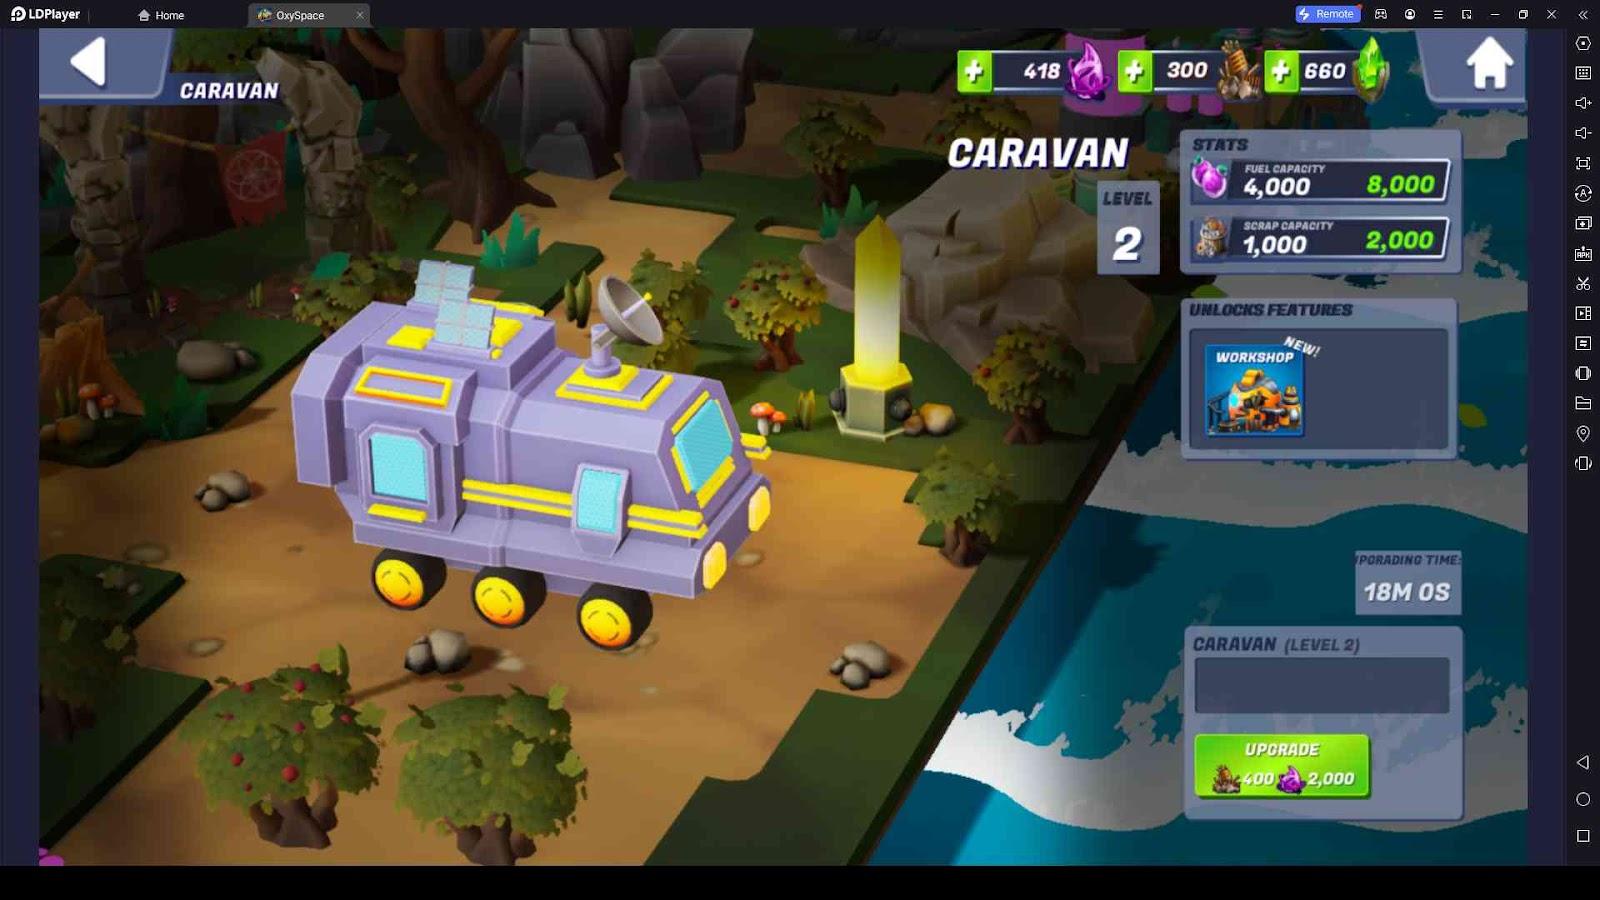 Upgrade the Caravan in OxySpace